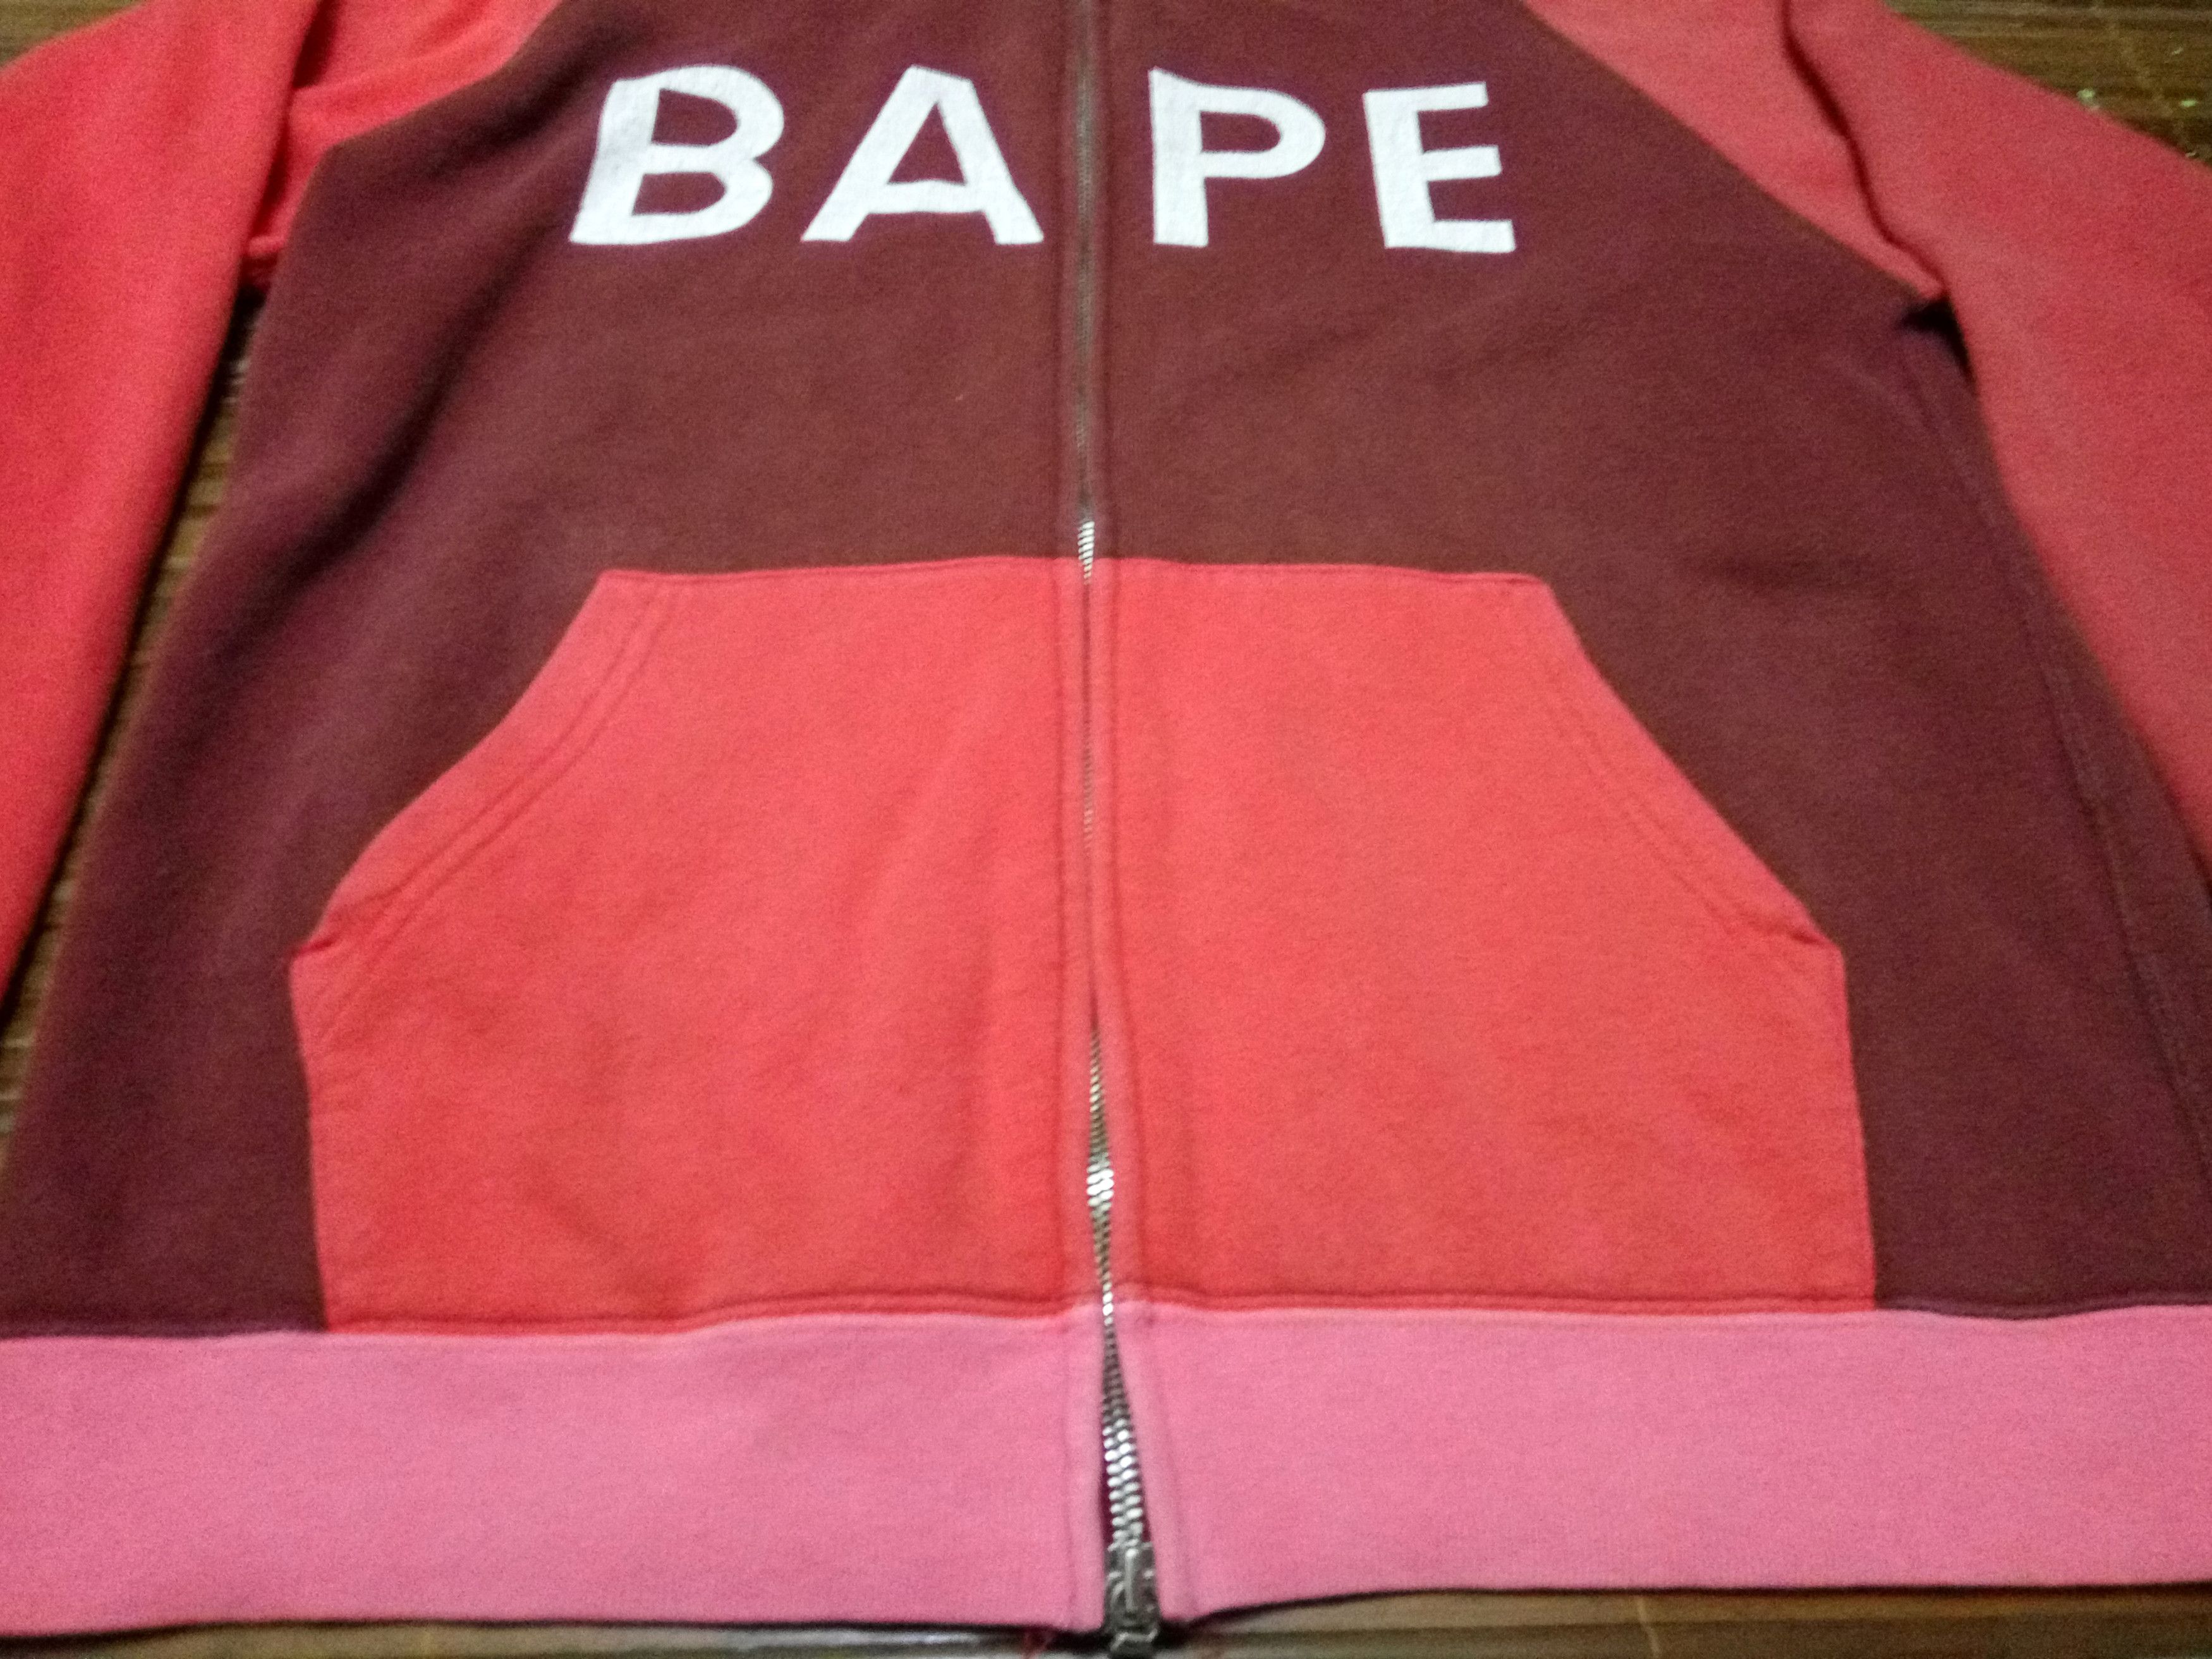 Bape Vintage BAPE A Bathing Ape Hoodie Camo Multi Color Small Size US S / EU 44-46 / 1 - 2 Preview